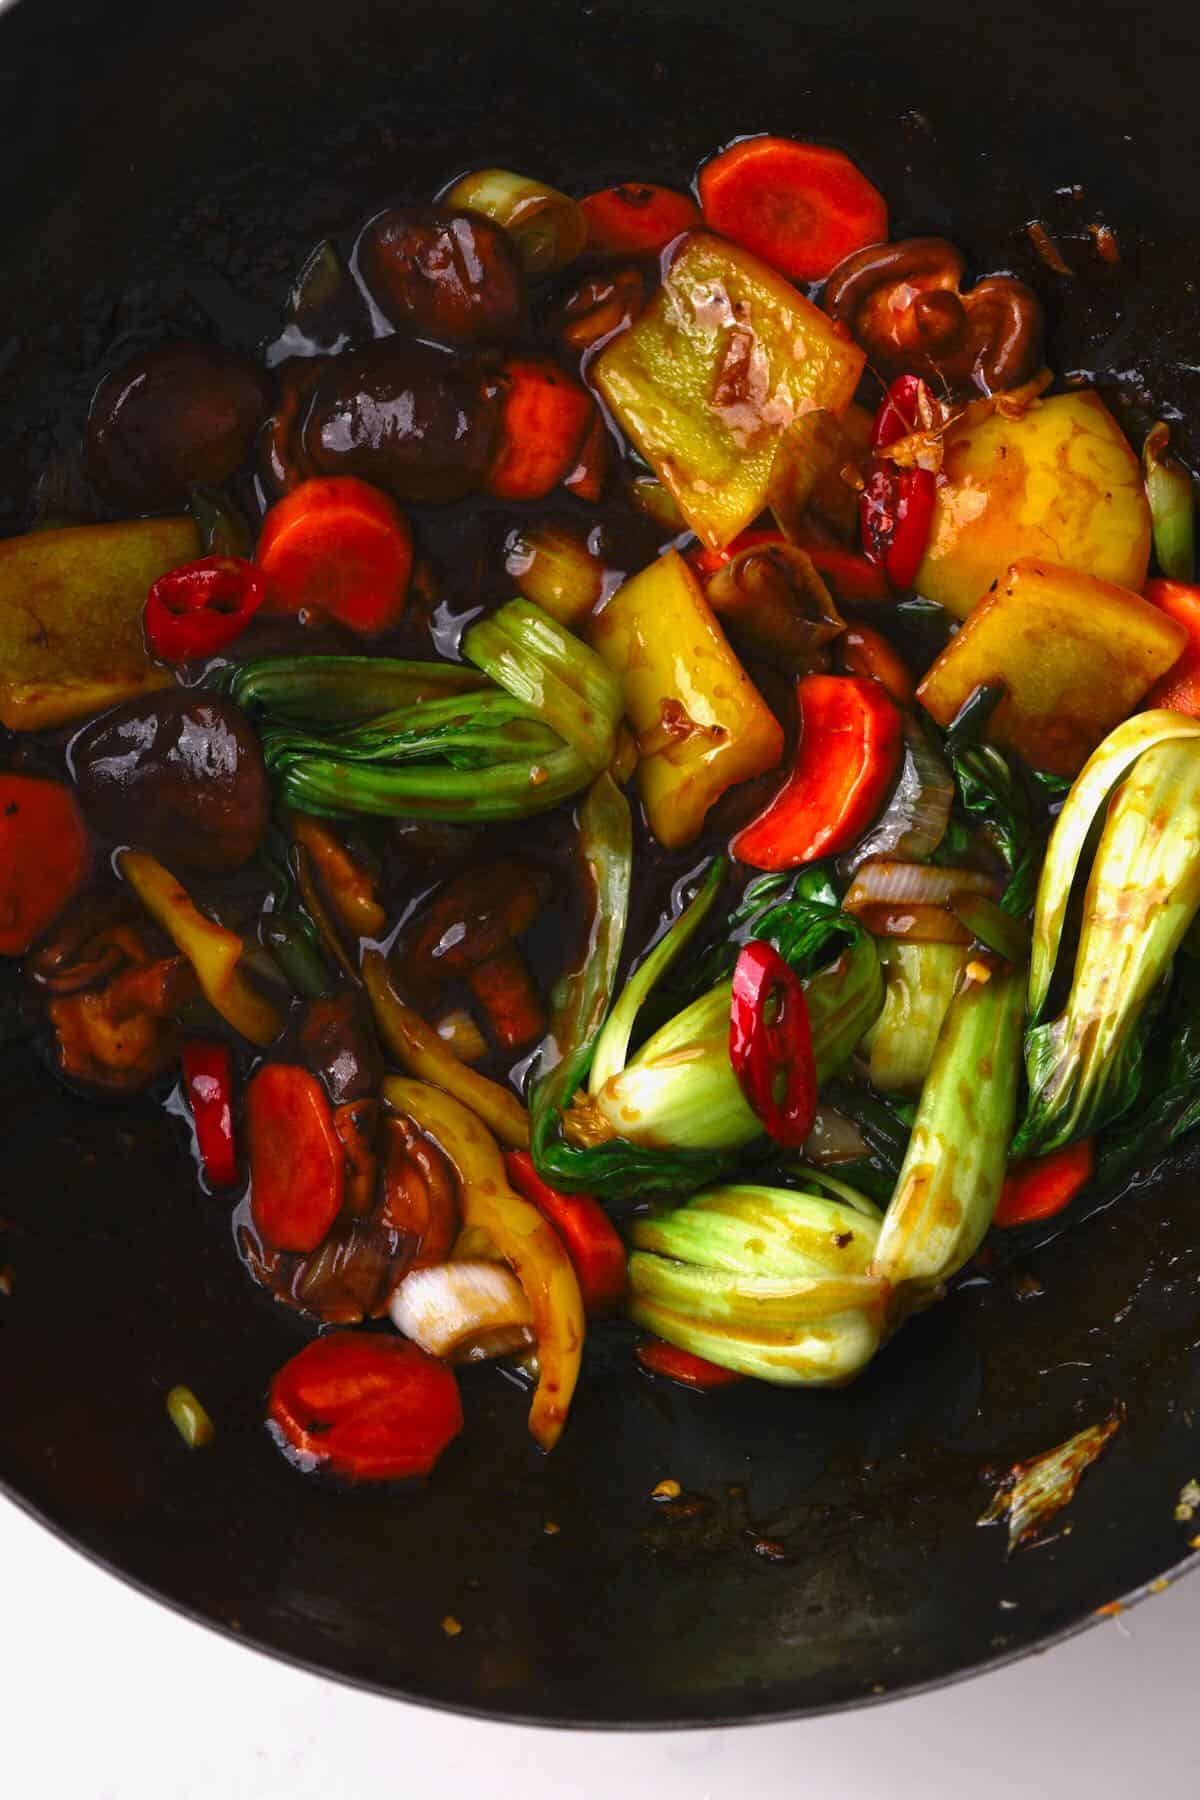 A large pan with stir fried veggies